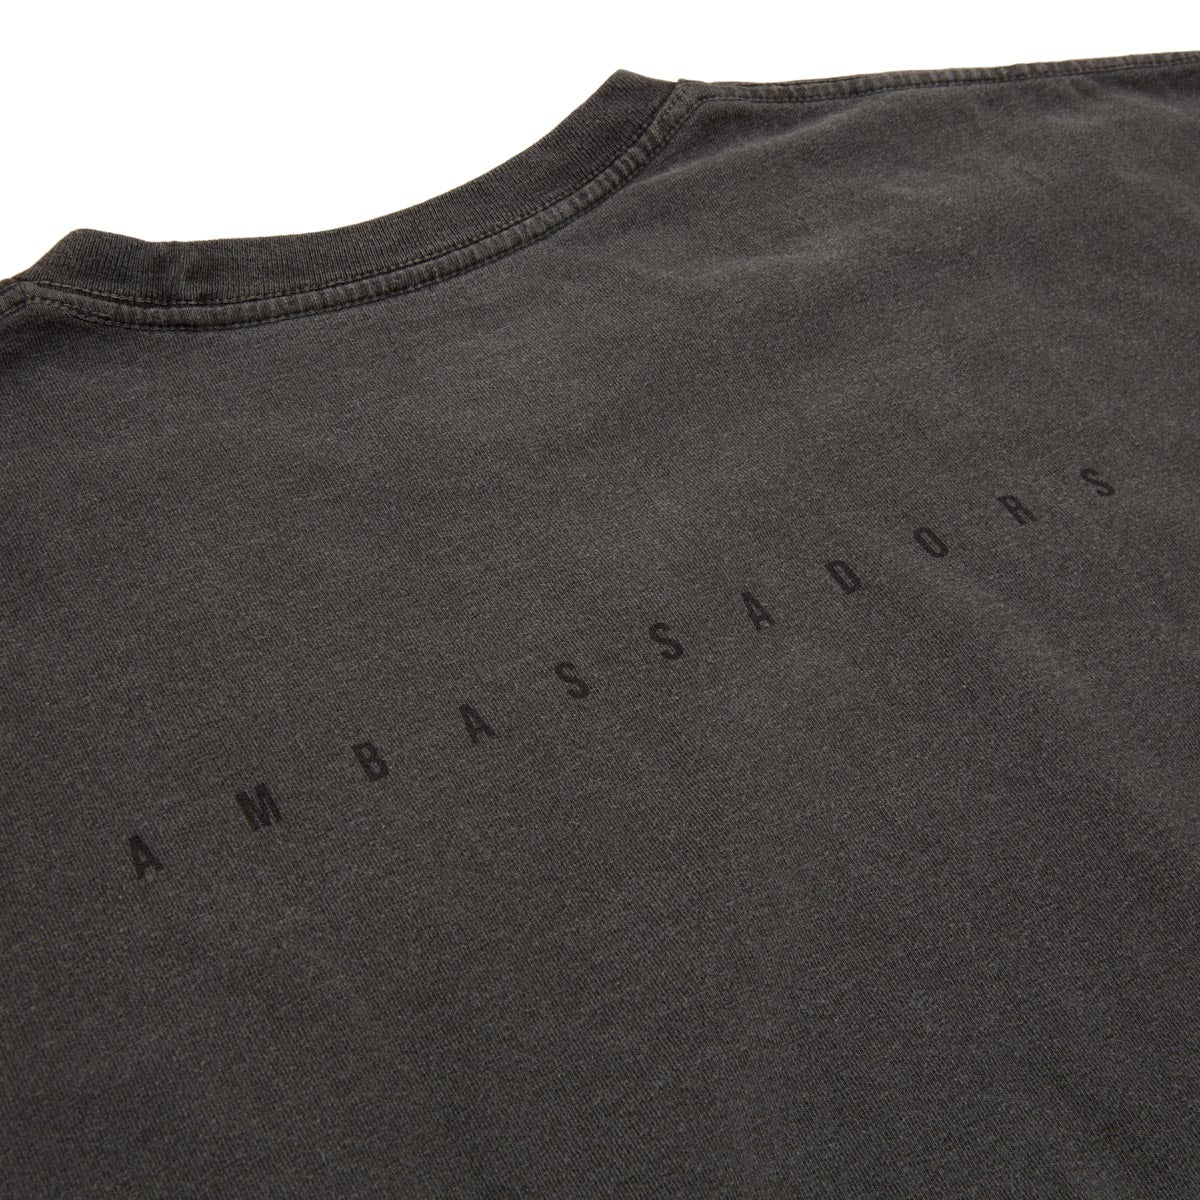 AVVA Reef Rider T-Shirt - Charcoal Grey image 4